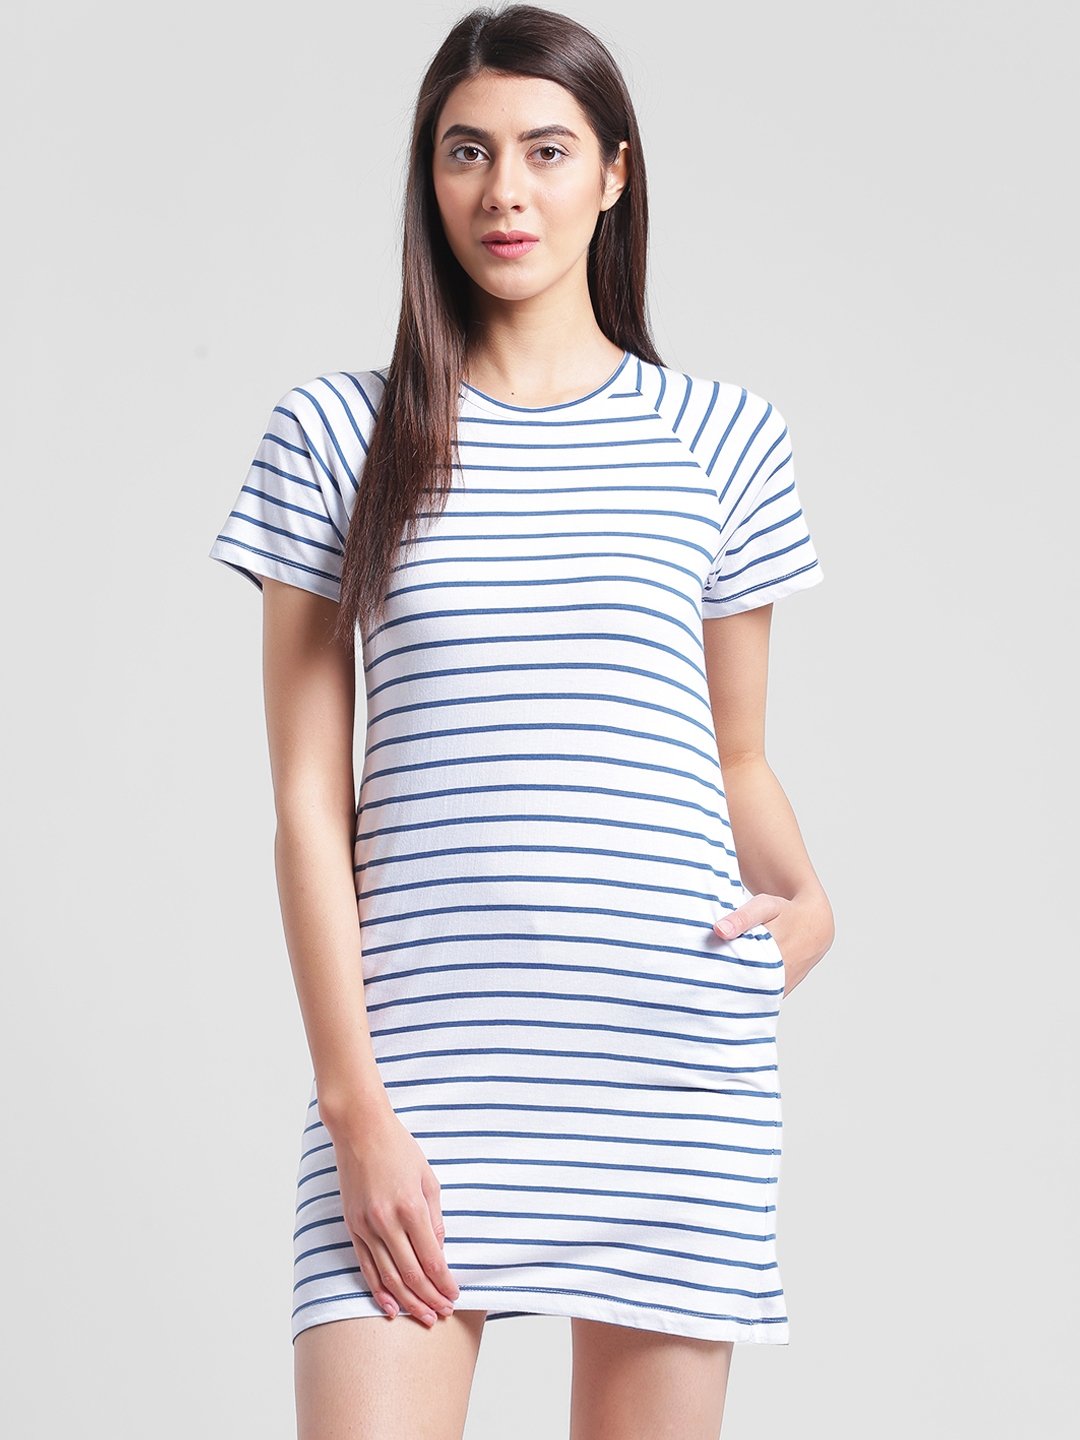 blue and white striped tee shirt dress